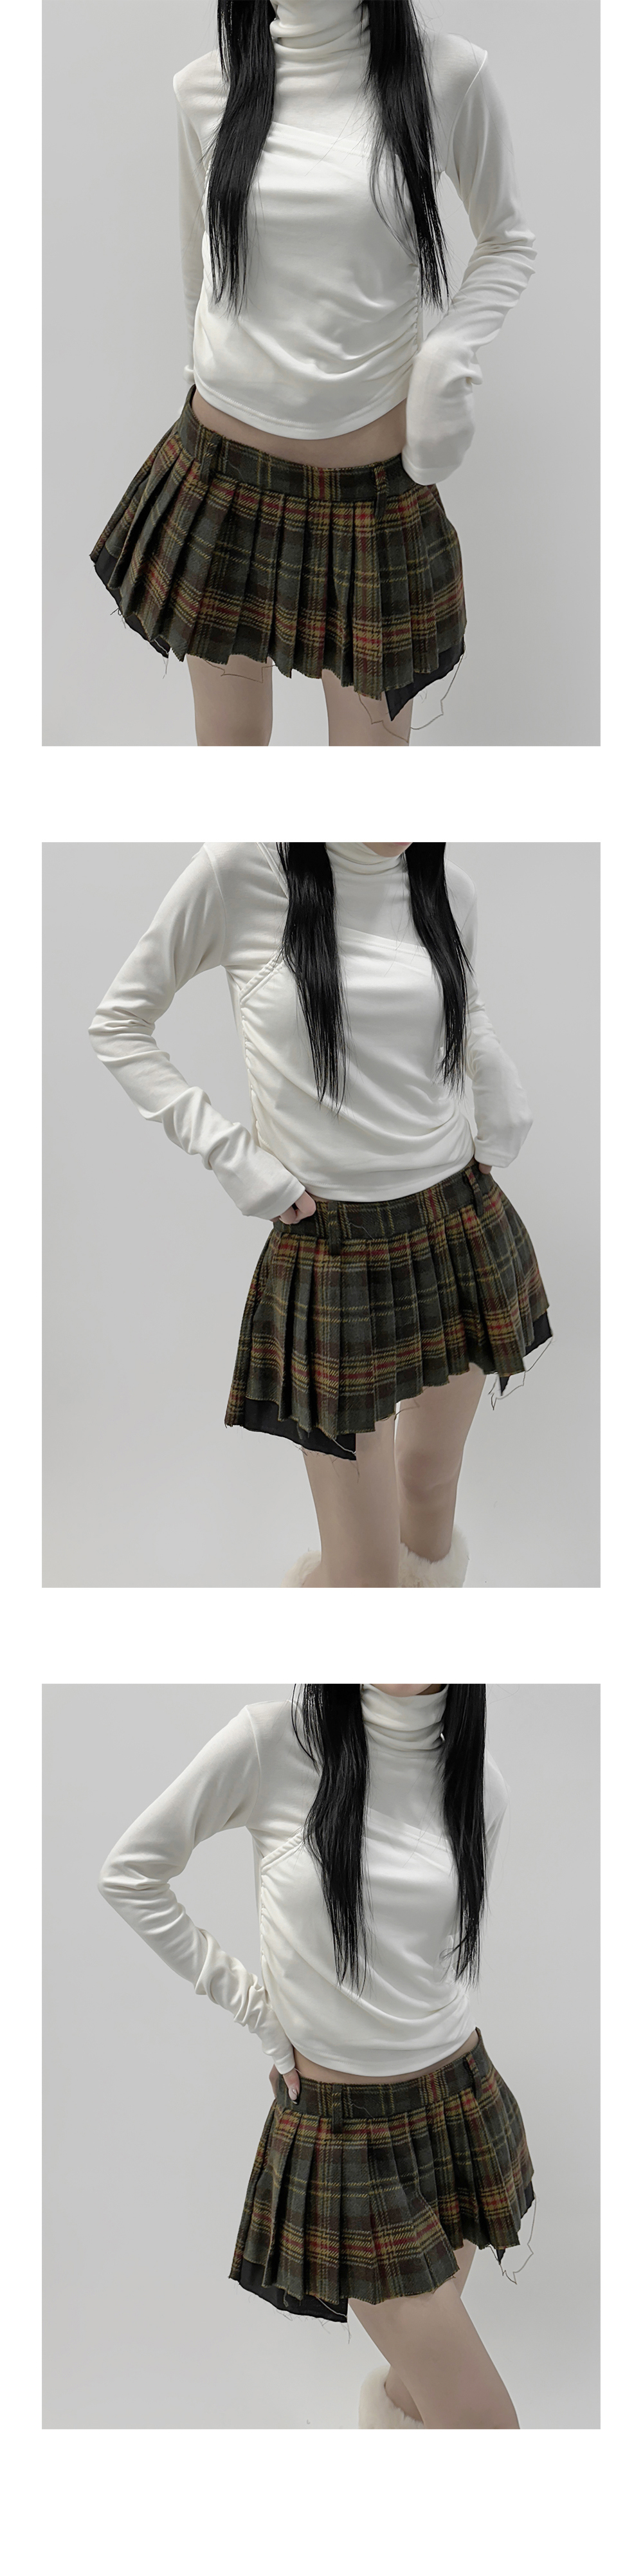 mini skirt oatmeal color image-S1L13